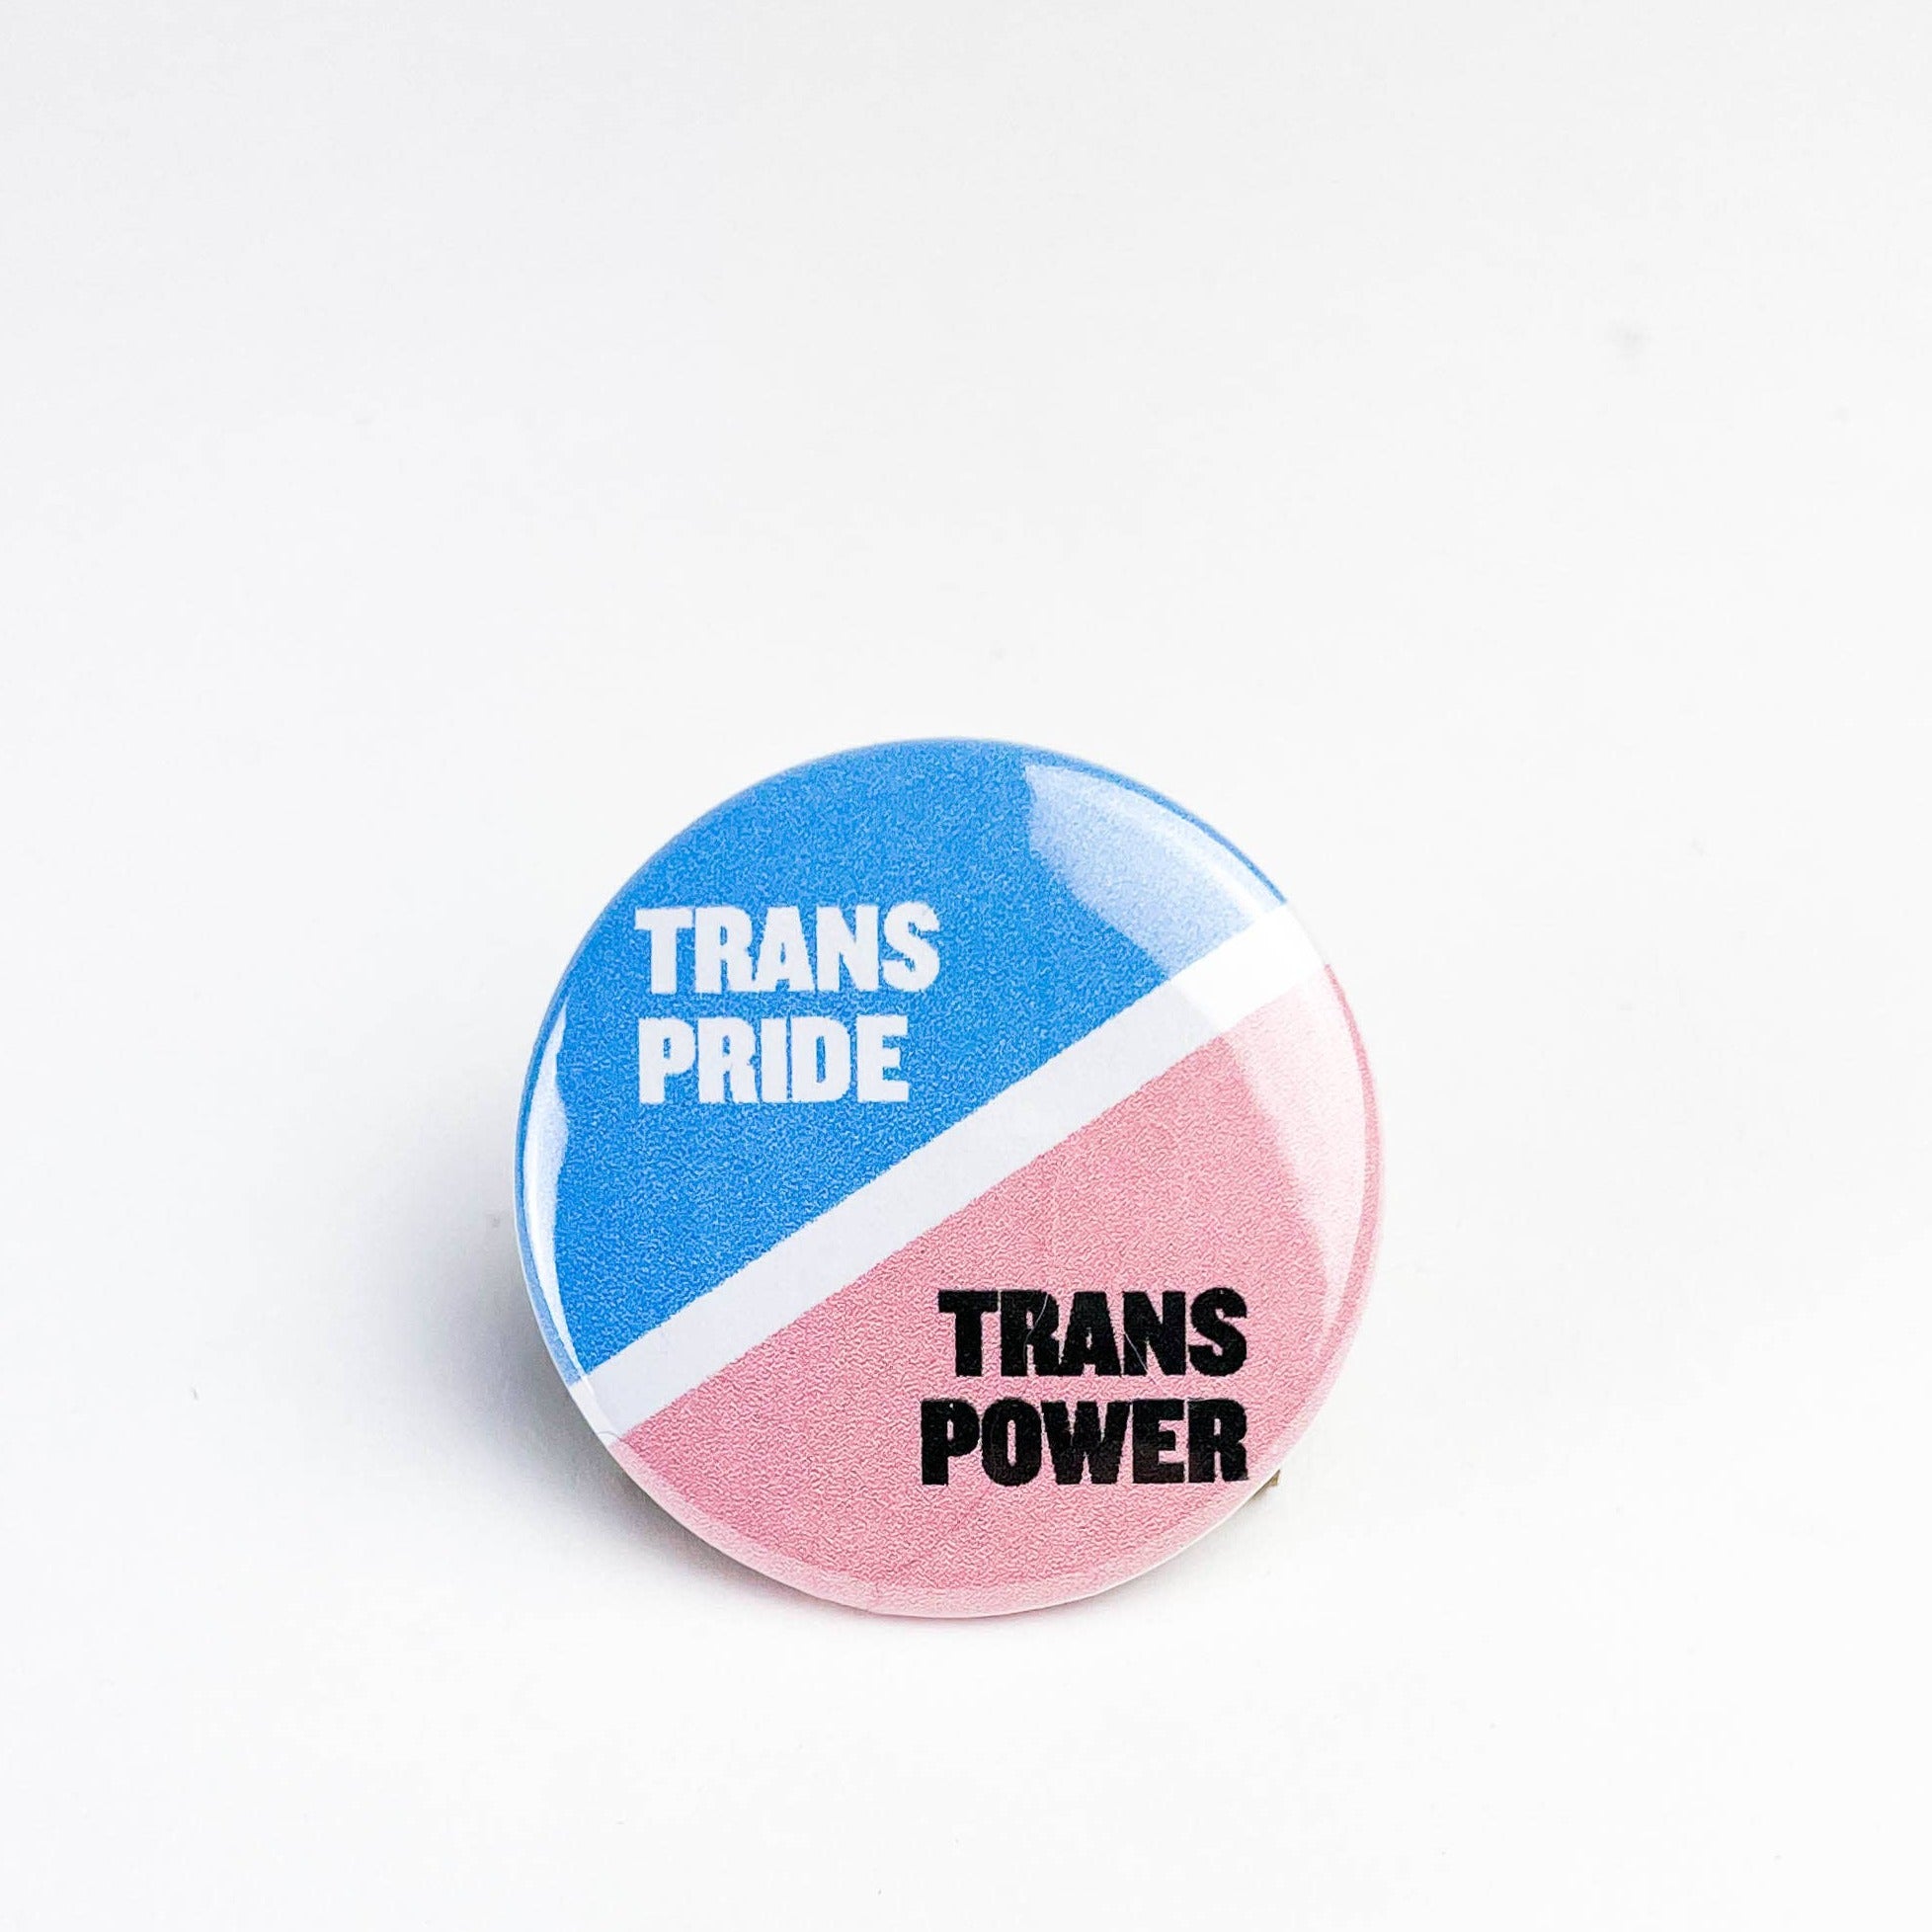 Trans Pride Trans Power Button